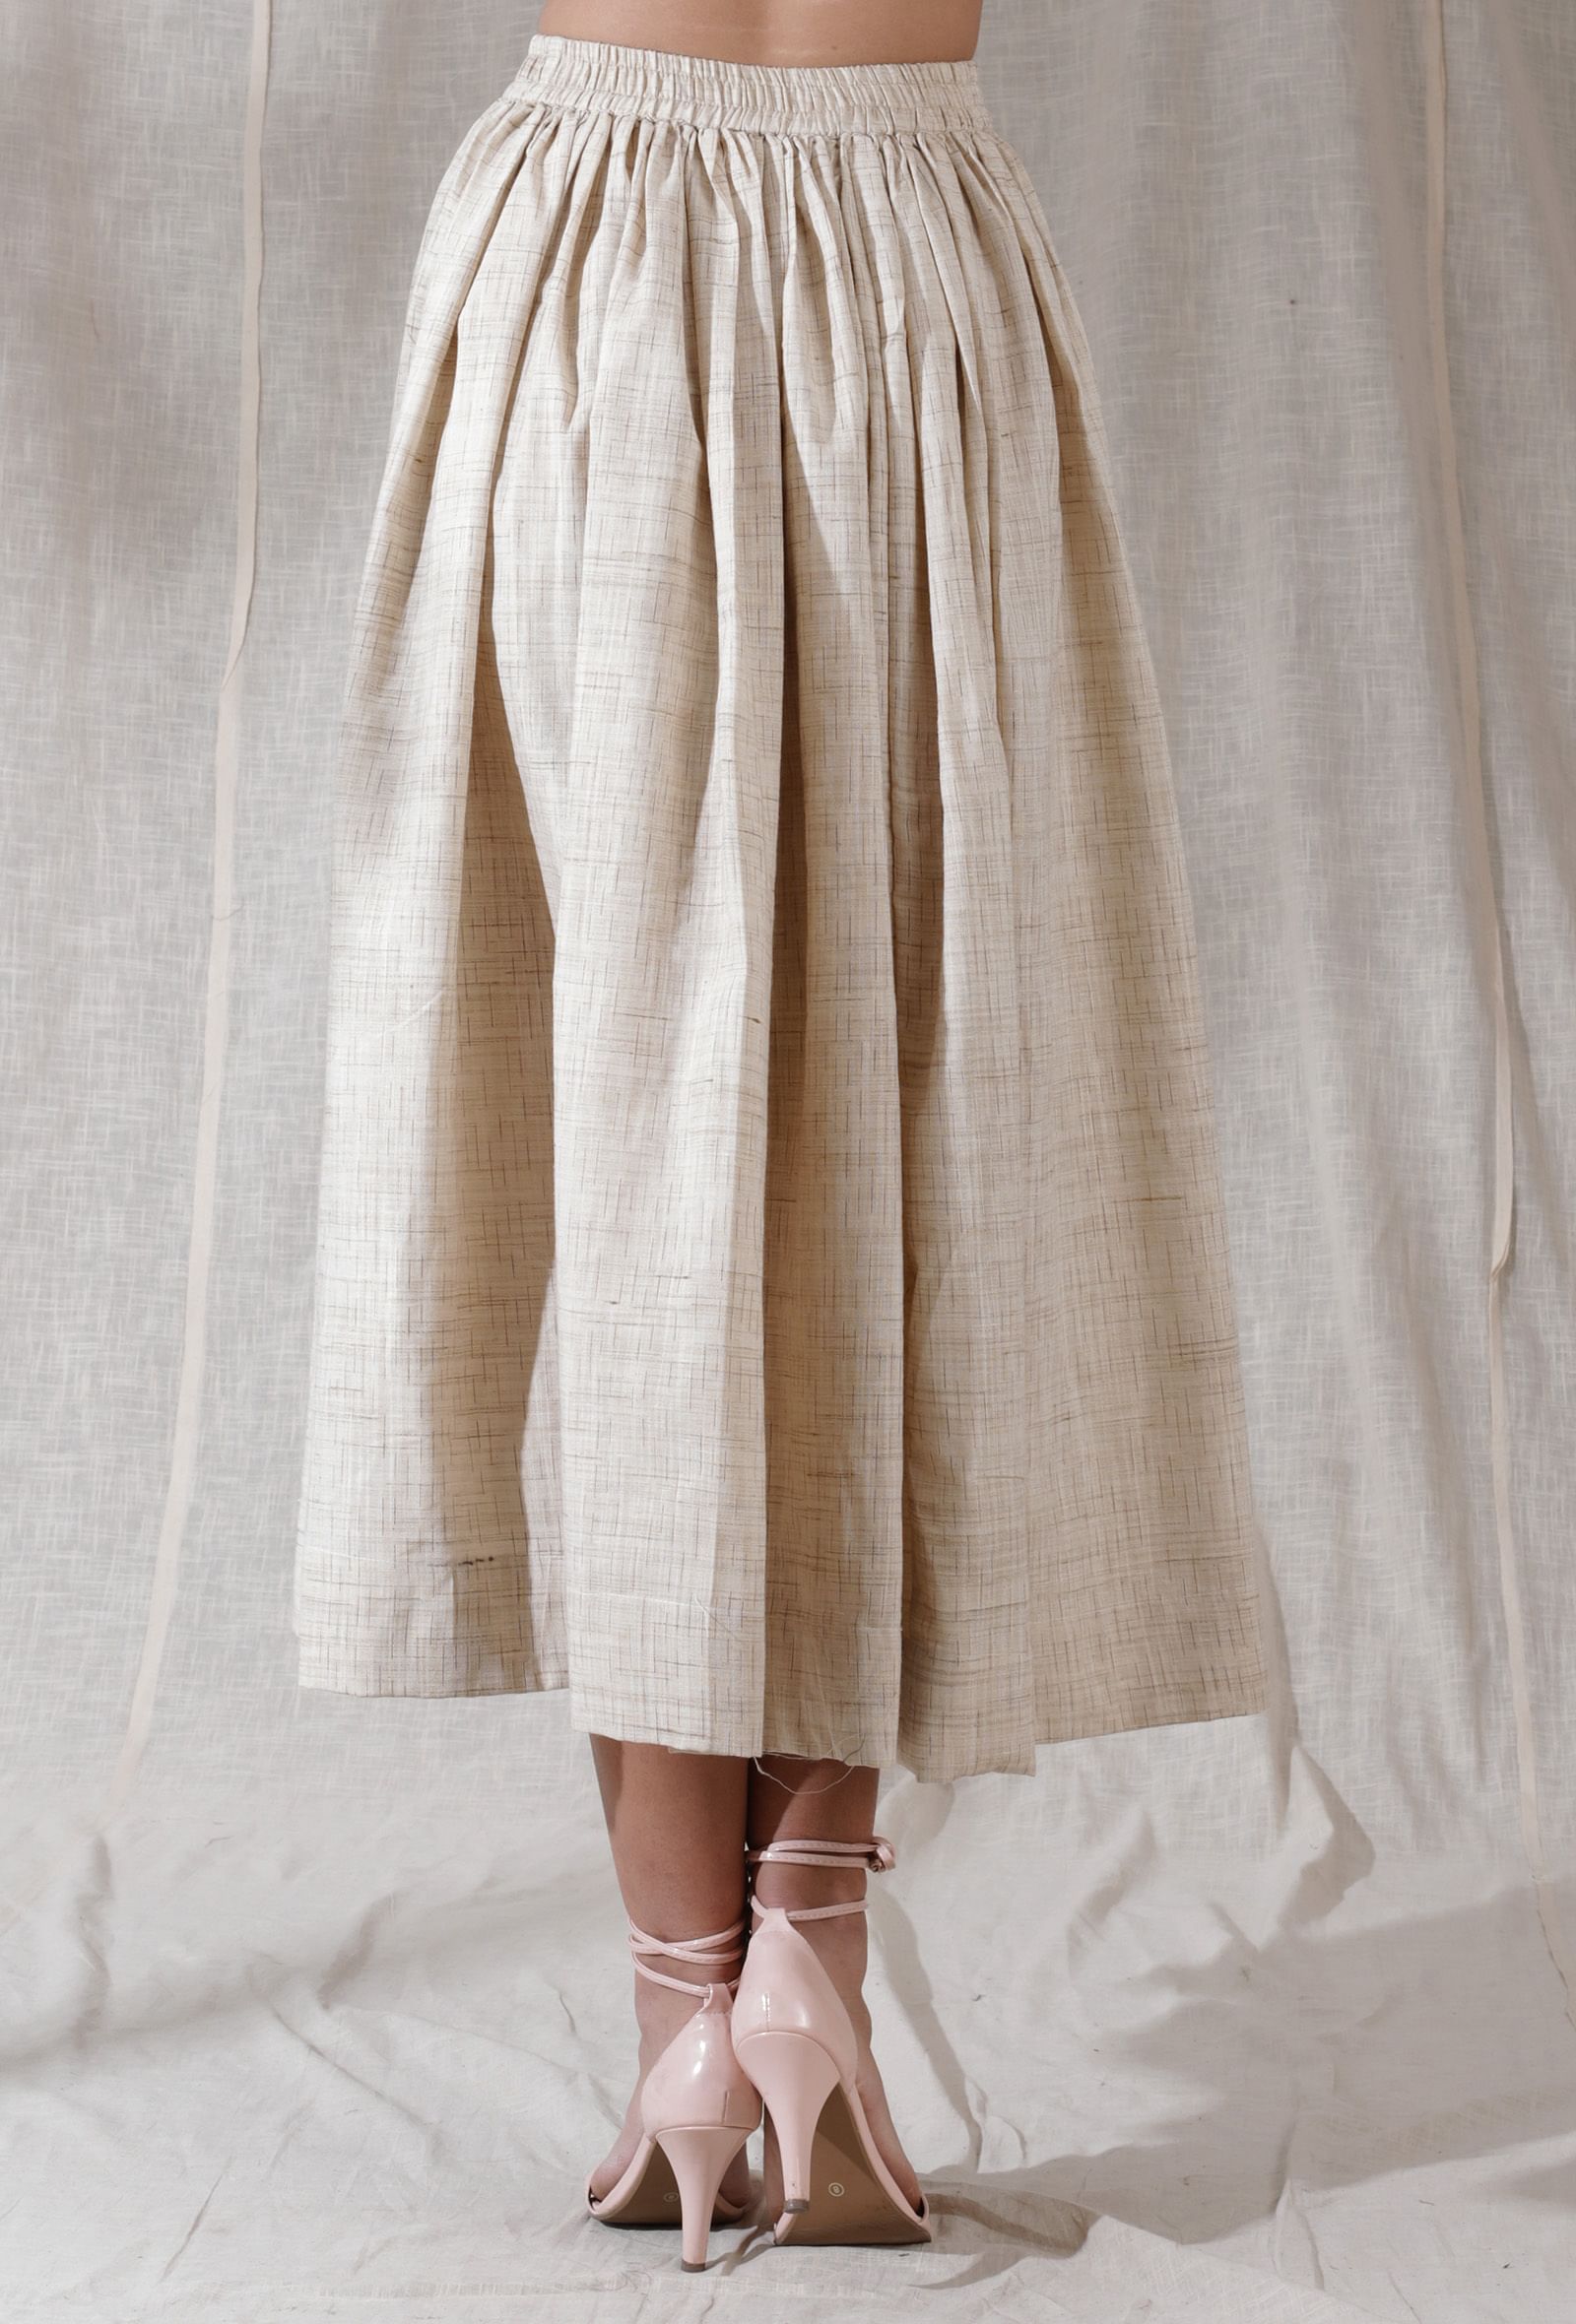 Ivory tan gathered and flared khadi calf length skirt